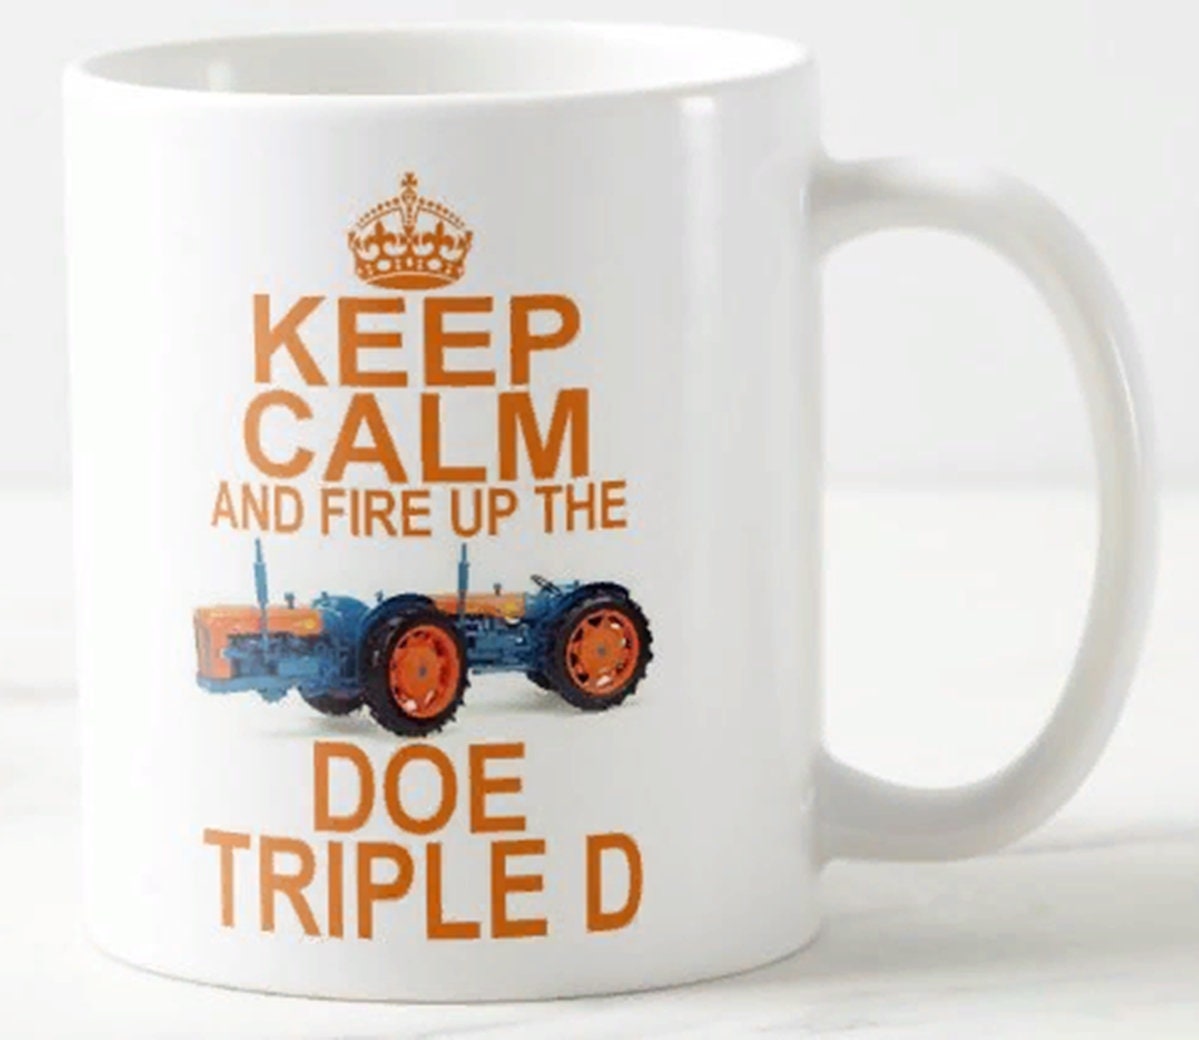 Triple D mug